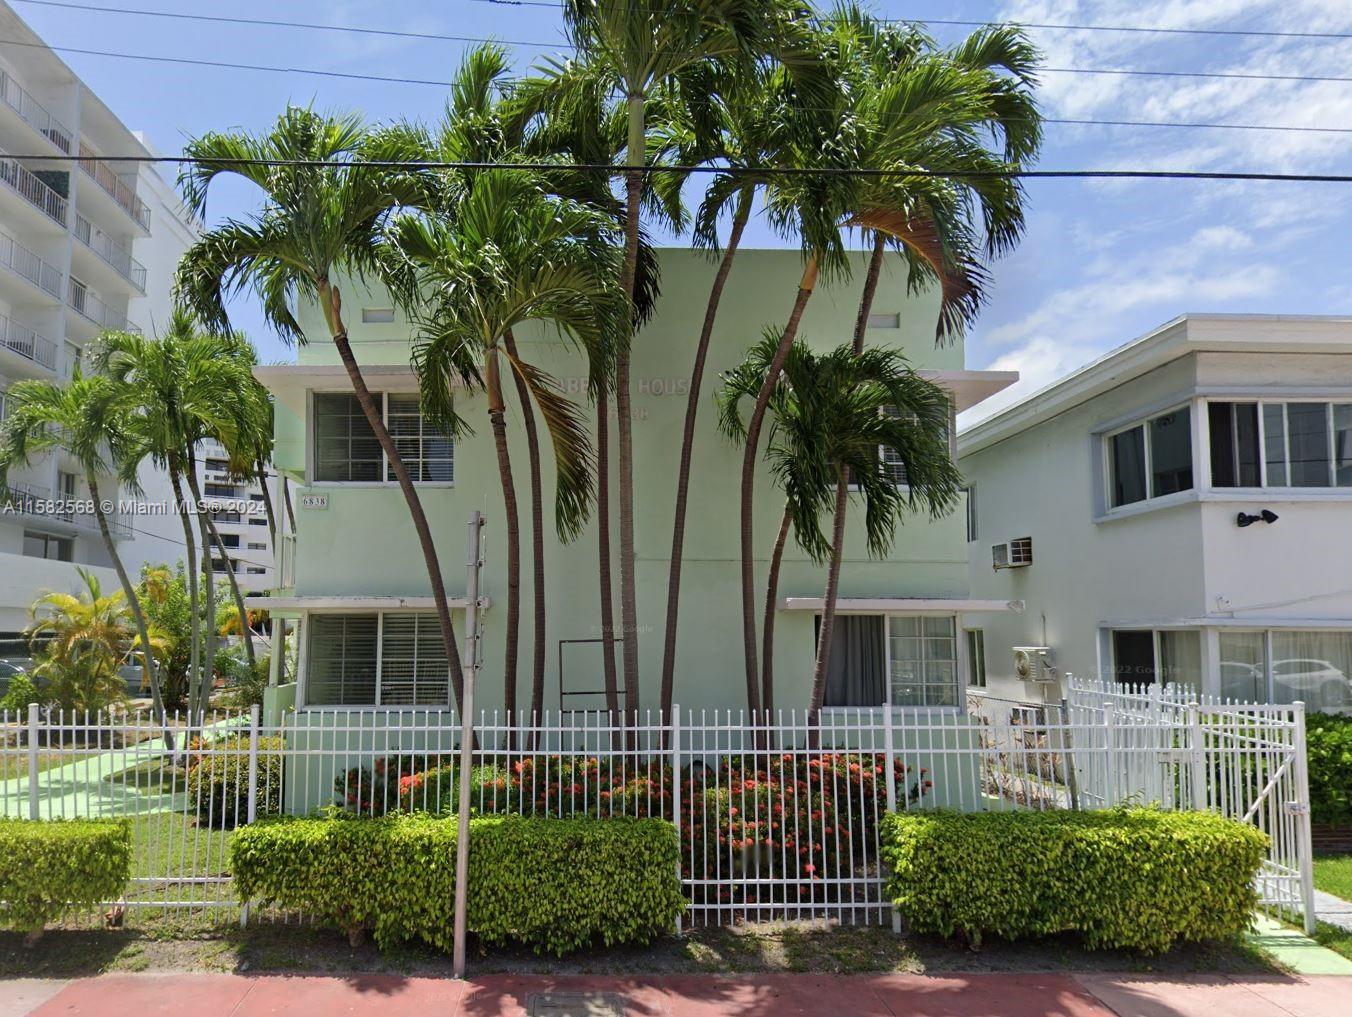 Rental Property at 6838 Abbott Ave, Miami Beach, Miami-Dade County, Florida -  - $2,000,000 MO.